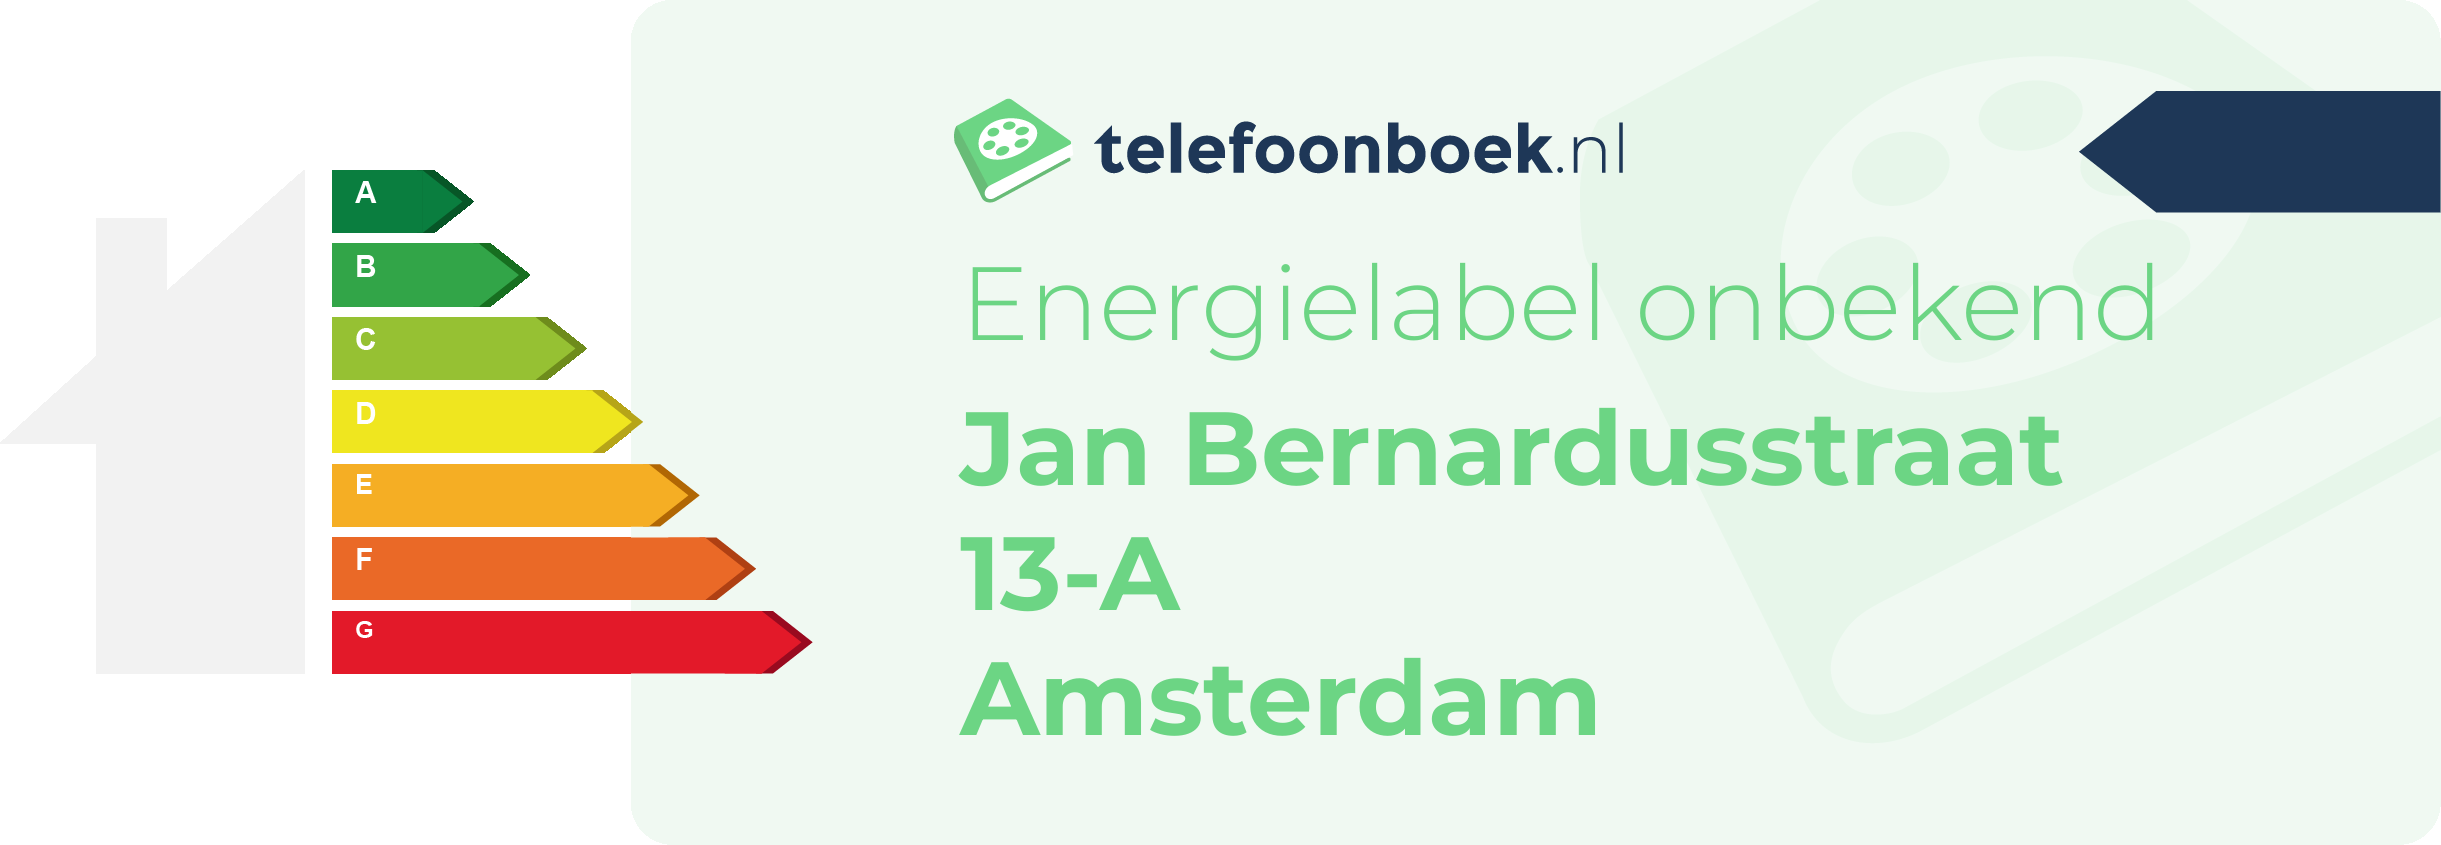 Energielabel Jan Bernardusstraat 13-A Amsterdam